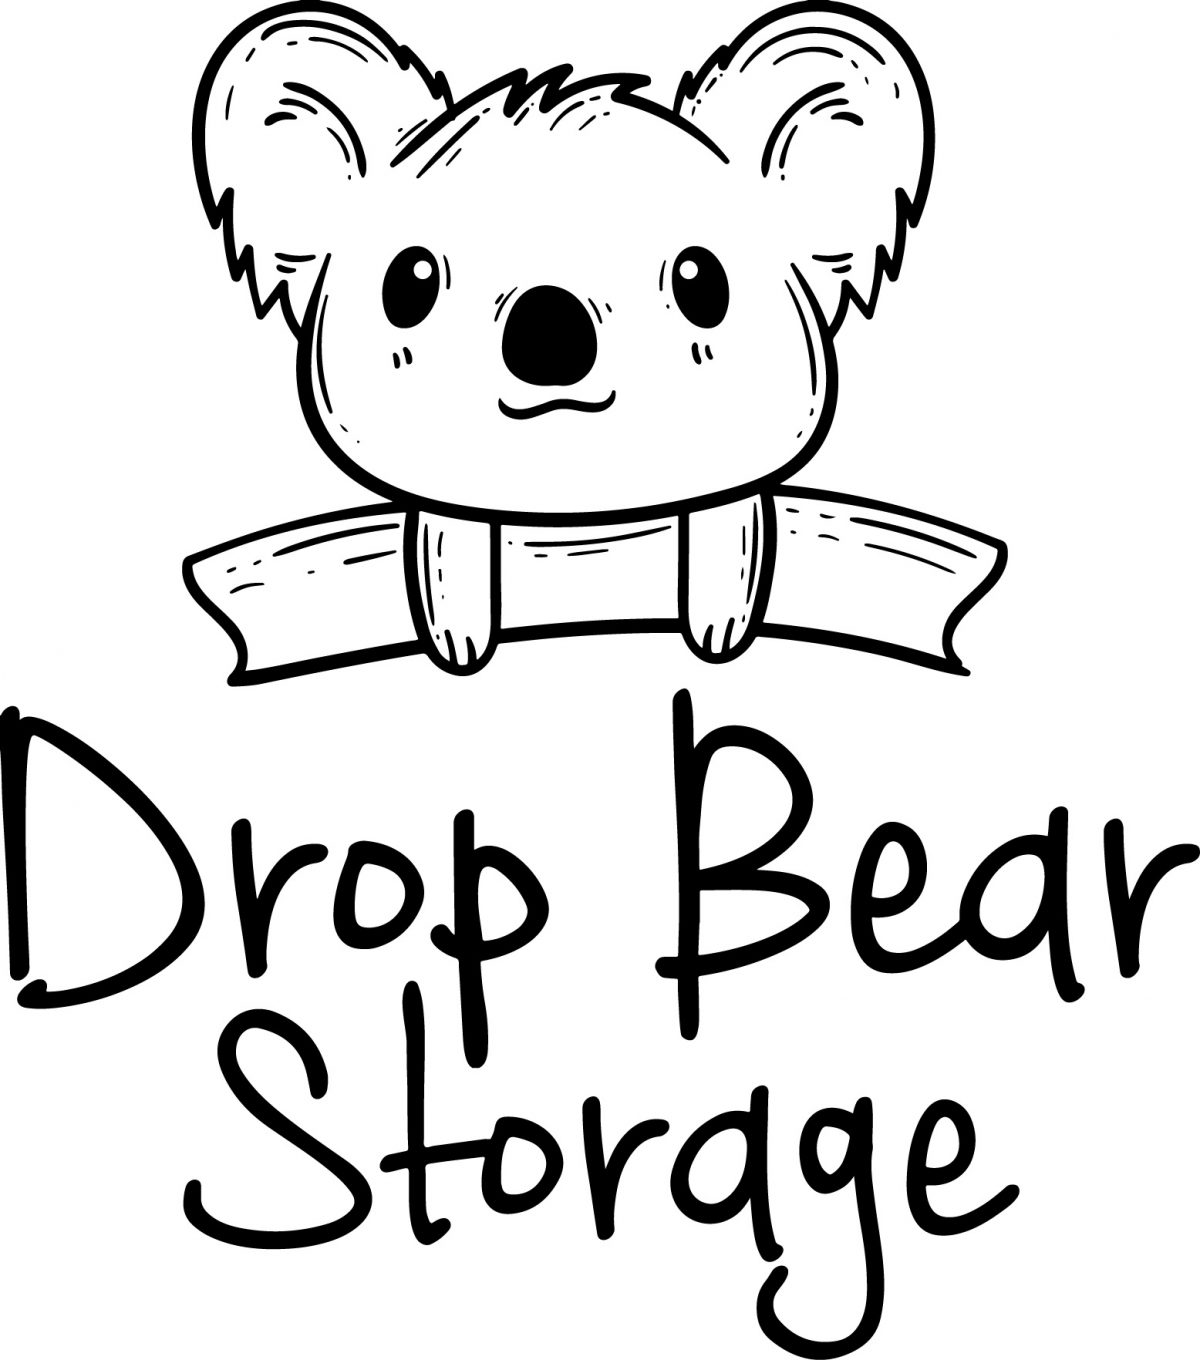 Drop bear storage